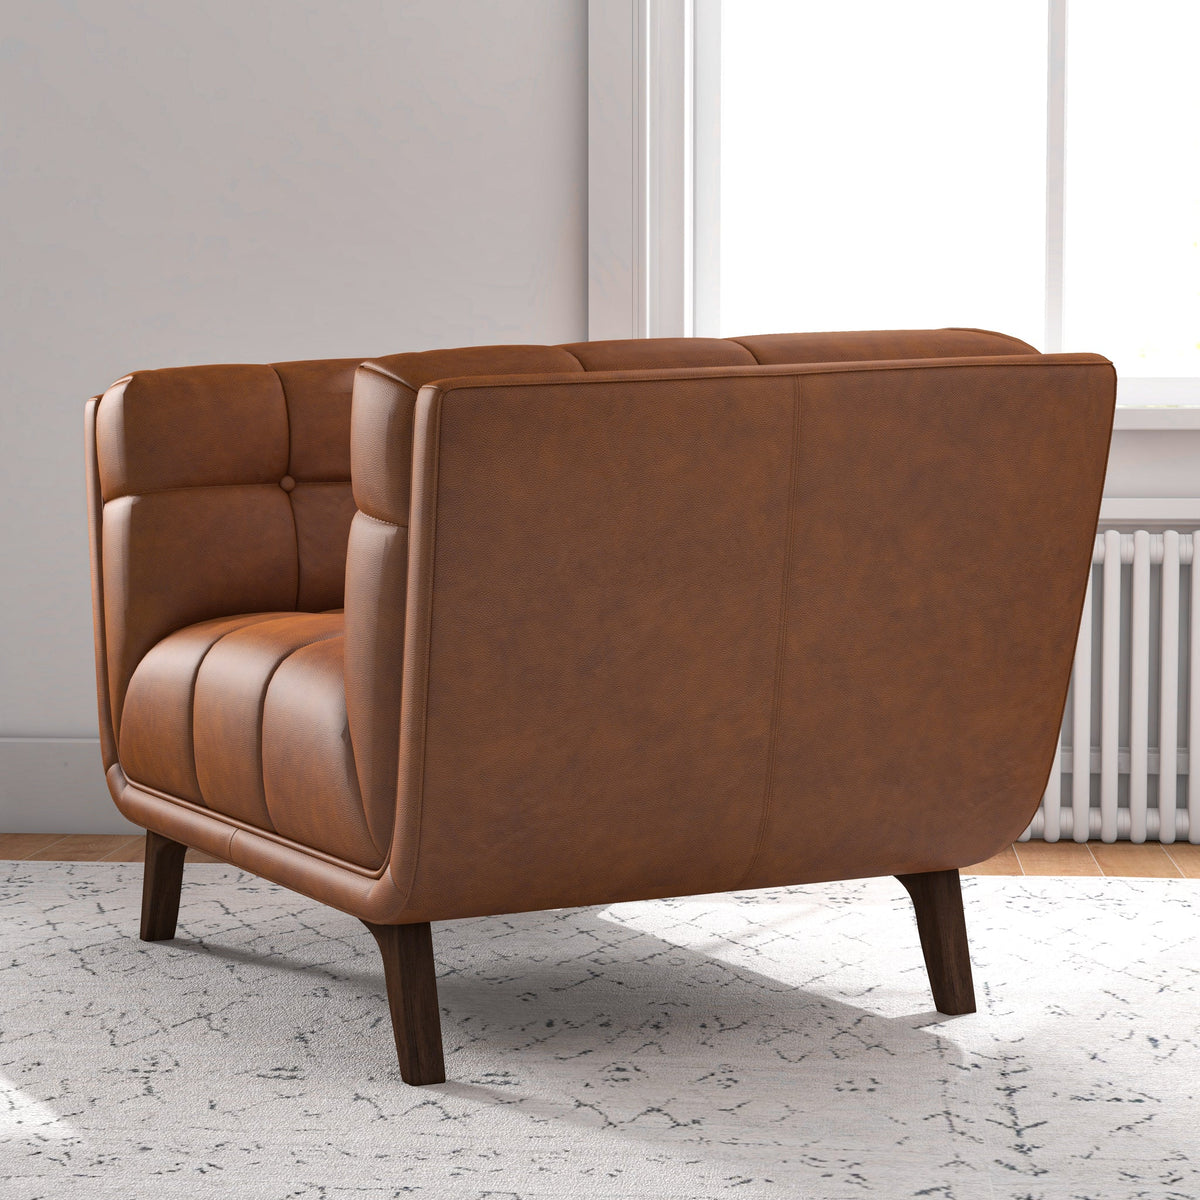 Kano Lounge Chair - Tan Leather | MidinMod | Houston TX | Best Furniture stores in Houston